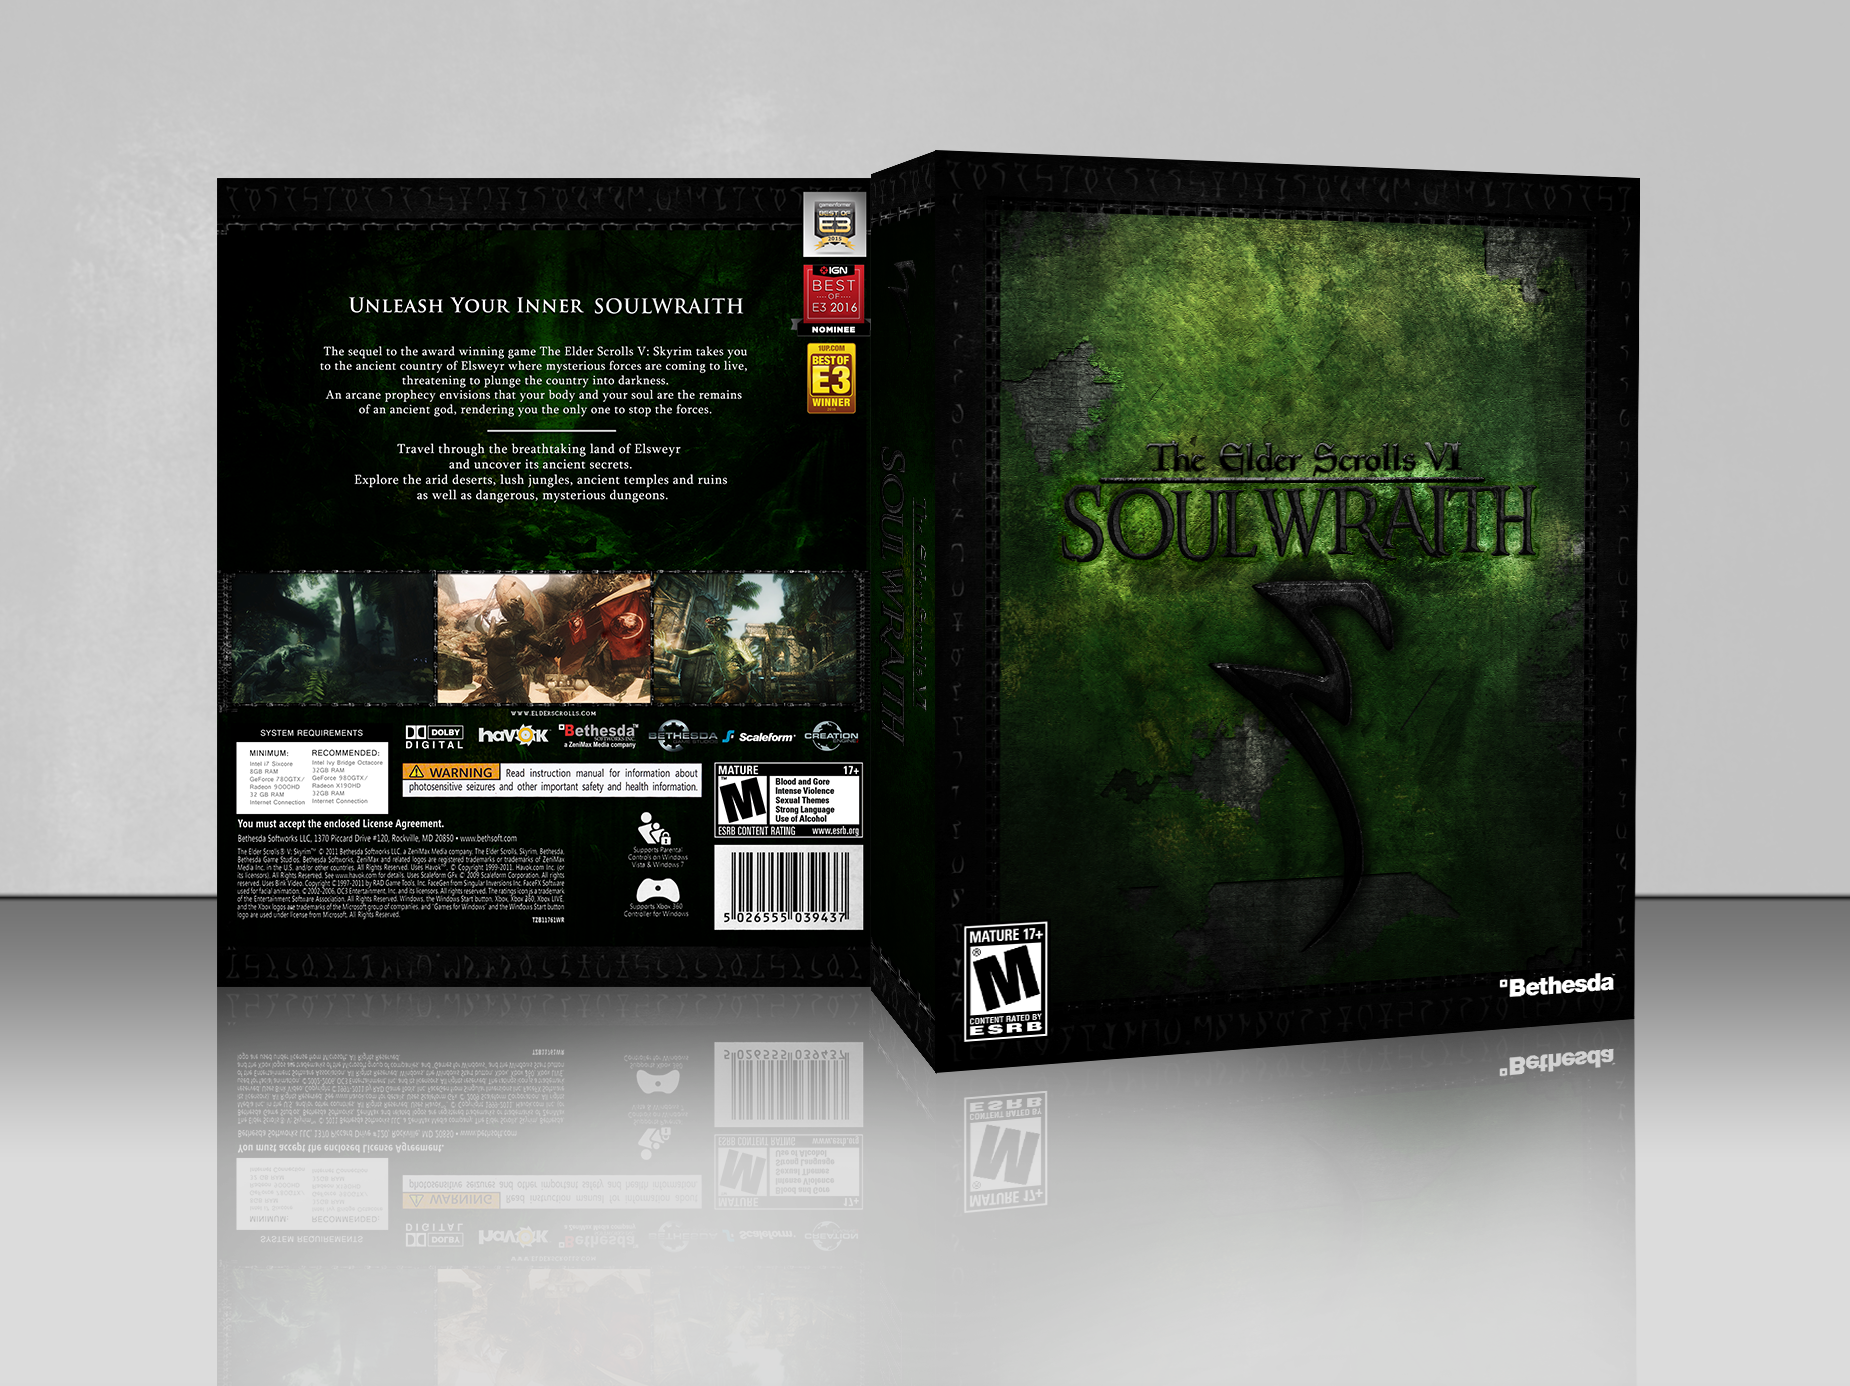 The Elder Scrolls VI: Soulwraith box cover